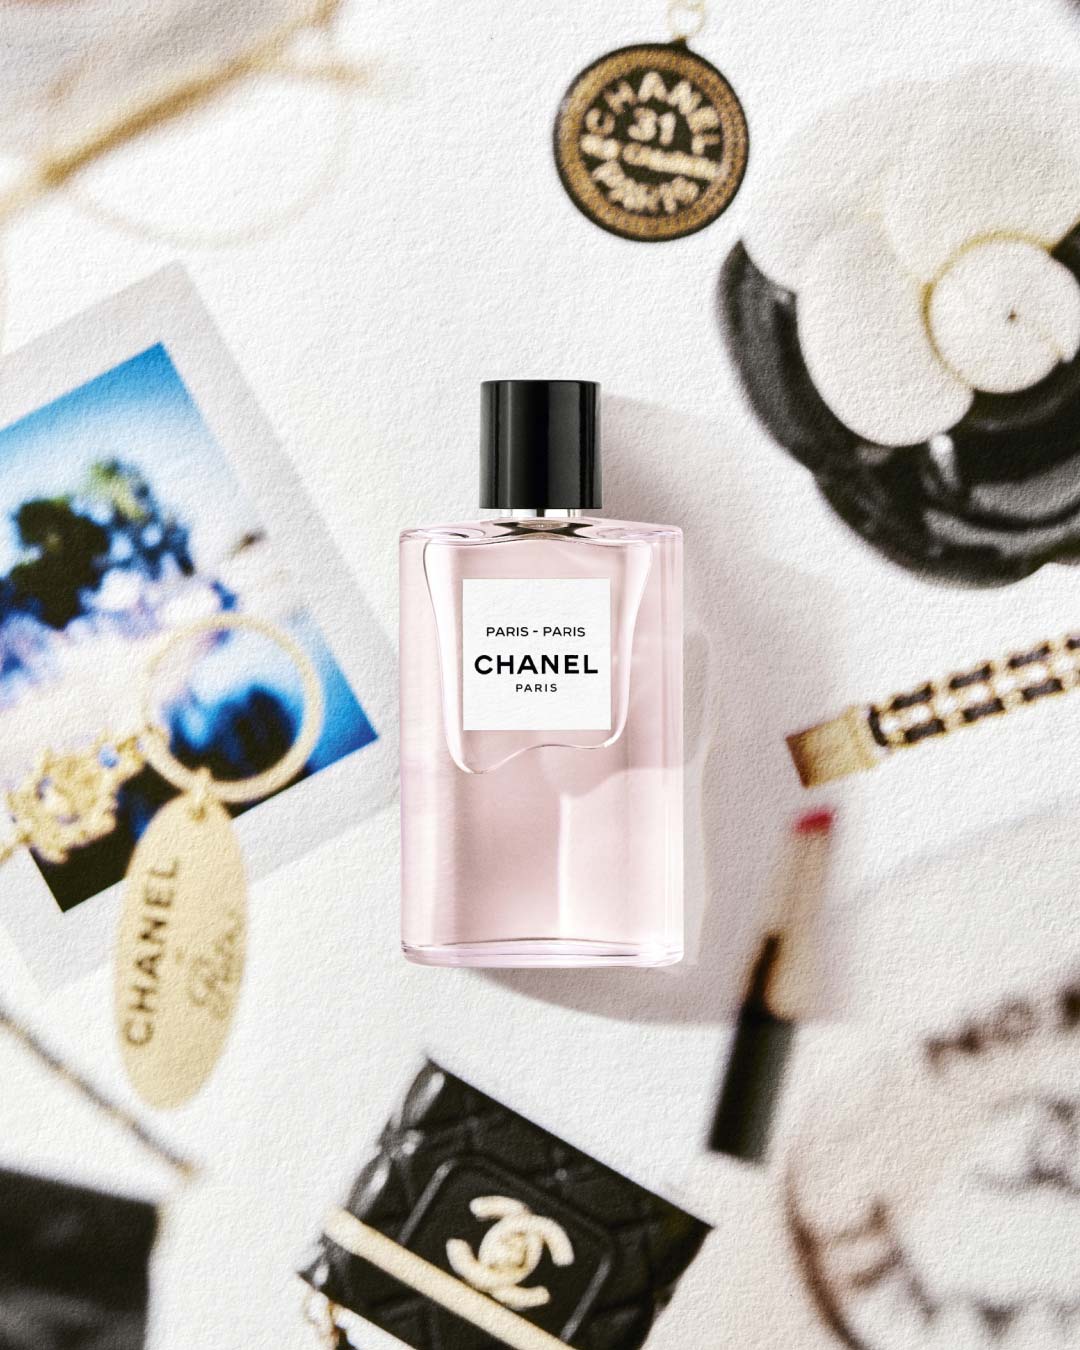 CHANEL LES EAUX DE CHANEL Collection Now In 50ml Flacons! ~ Fragrance News